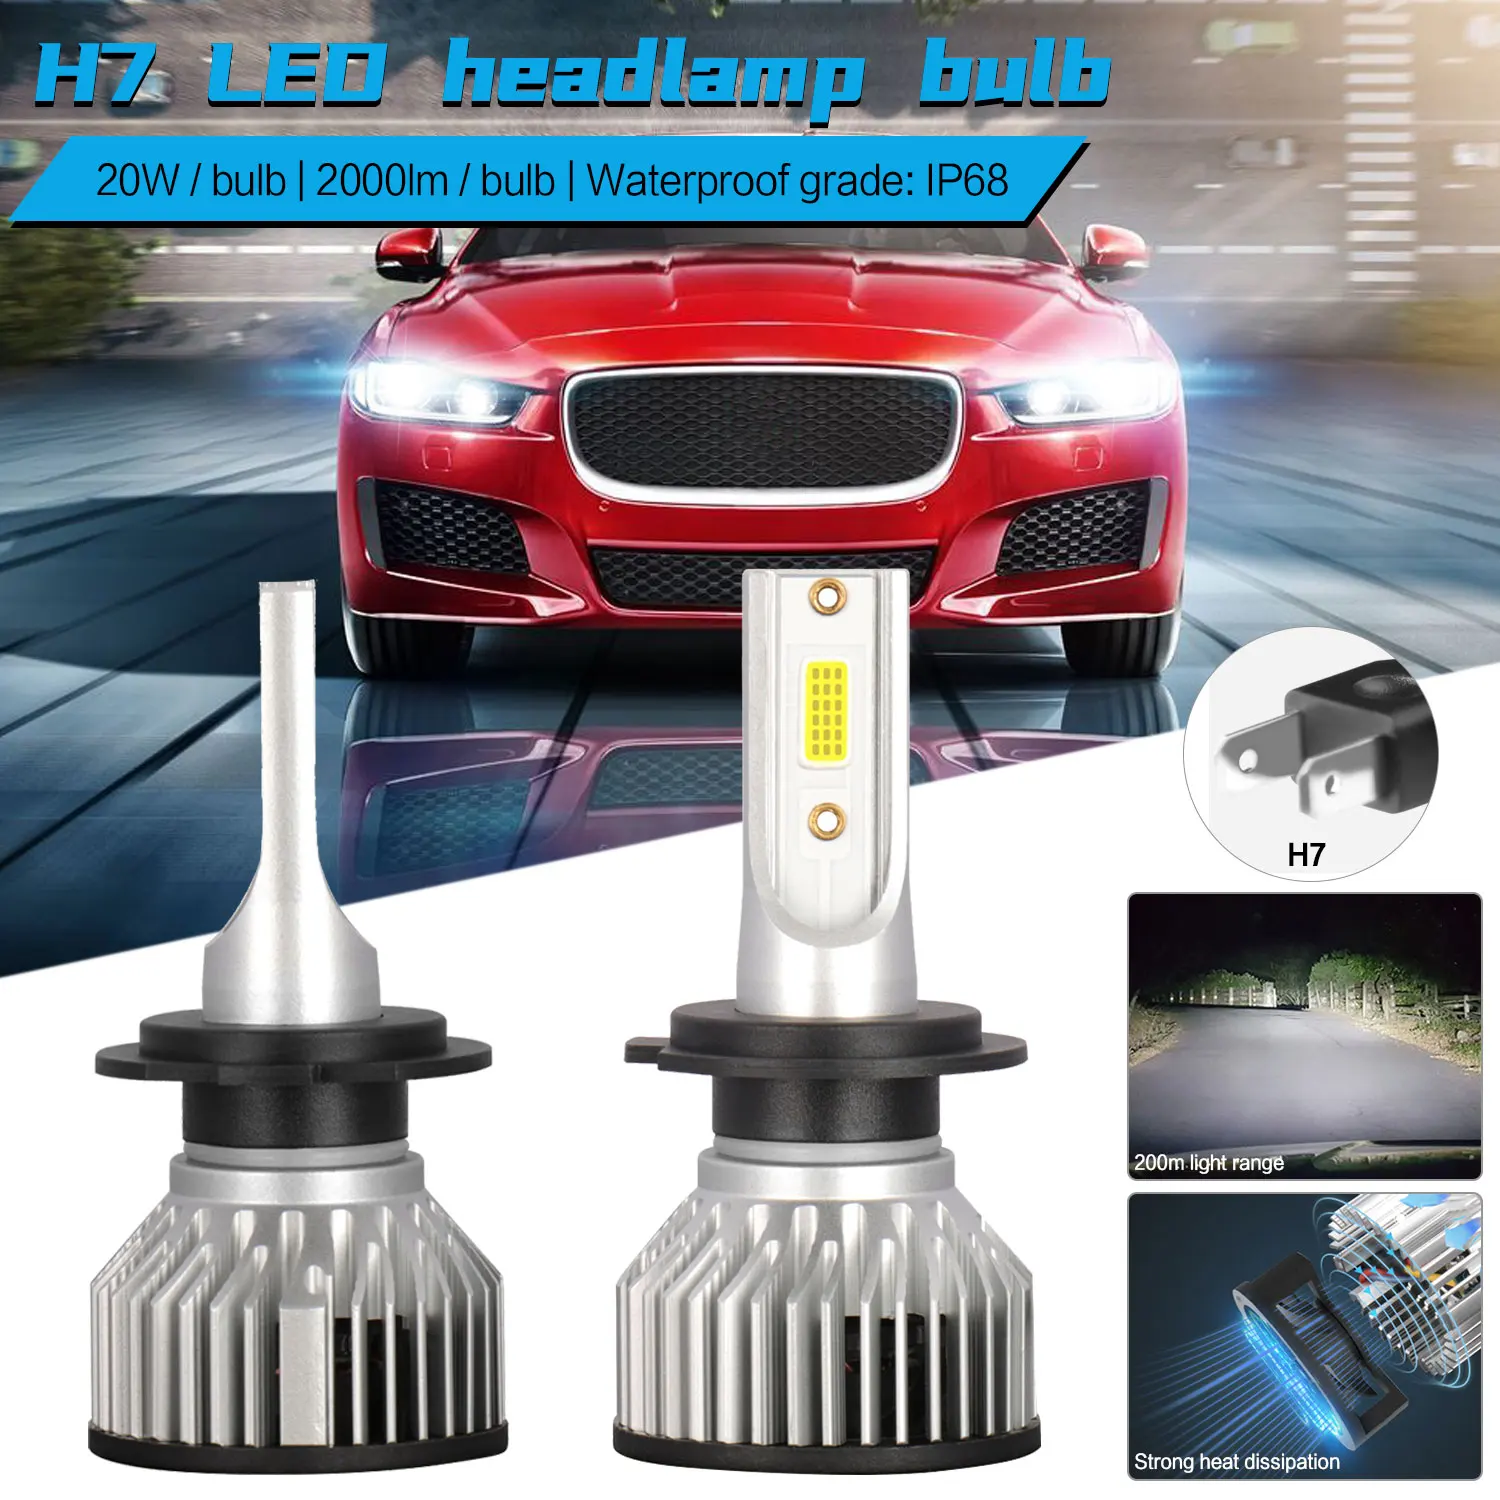 

2Pcs 40W H7 Universal LED Car Headlight Bulb White Fog Light Auto Headlamp 6000k RV HID Xenon 12V 24V 200M Distant